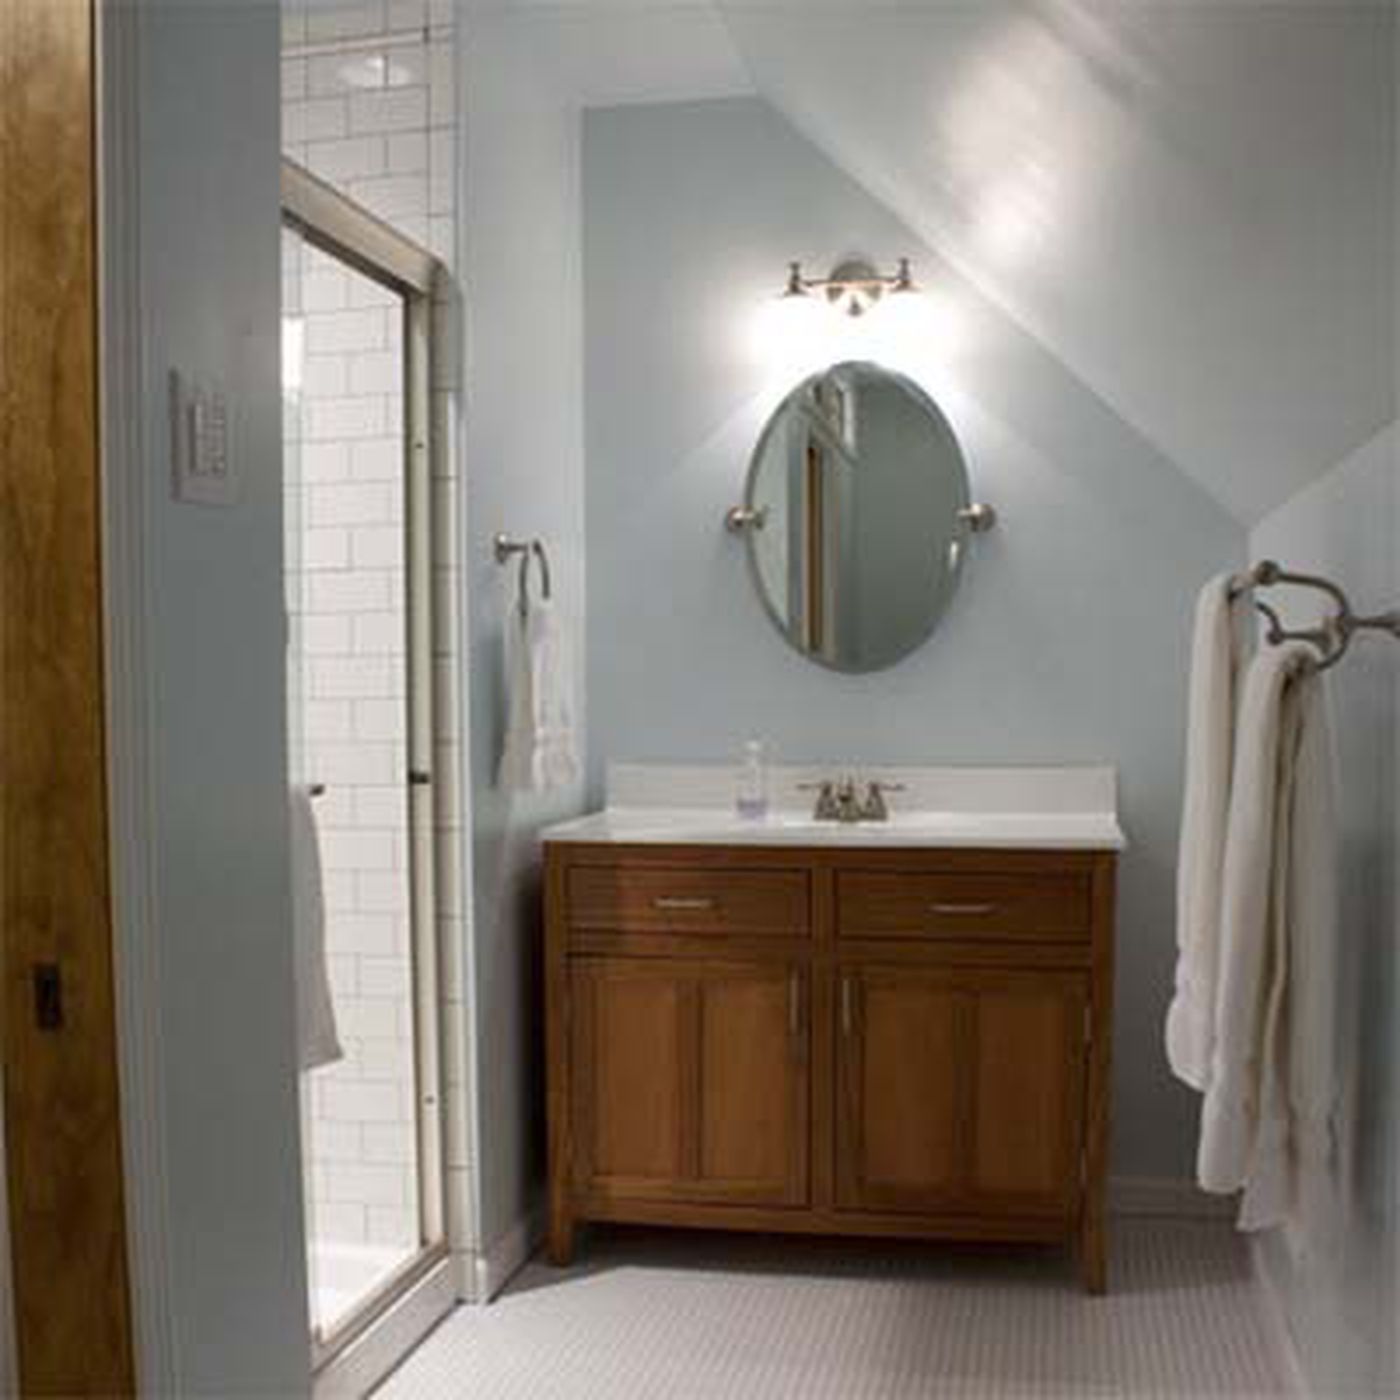 Small Glass Shelf 4 Bathroom Home Improvement Ground Edge 18/" x 6/" Curved Ends